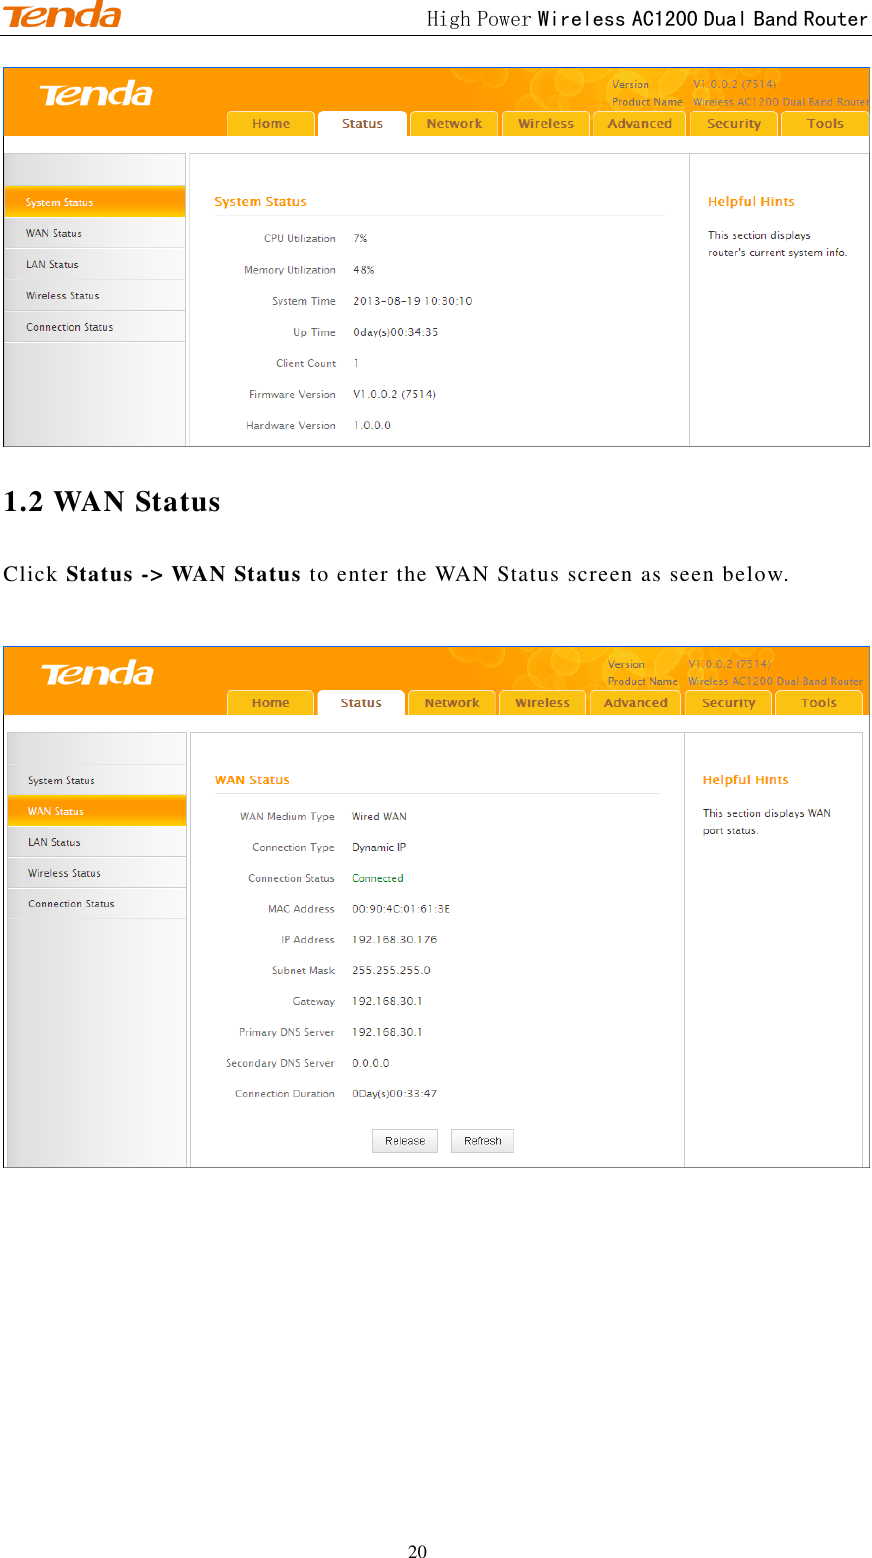                                             High Power Wireless AC1200 Dual Band Router 20  1.2 WAN Status Click Status -&gt; WAN Status to enter the WAN Status screen as seen below.   